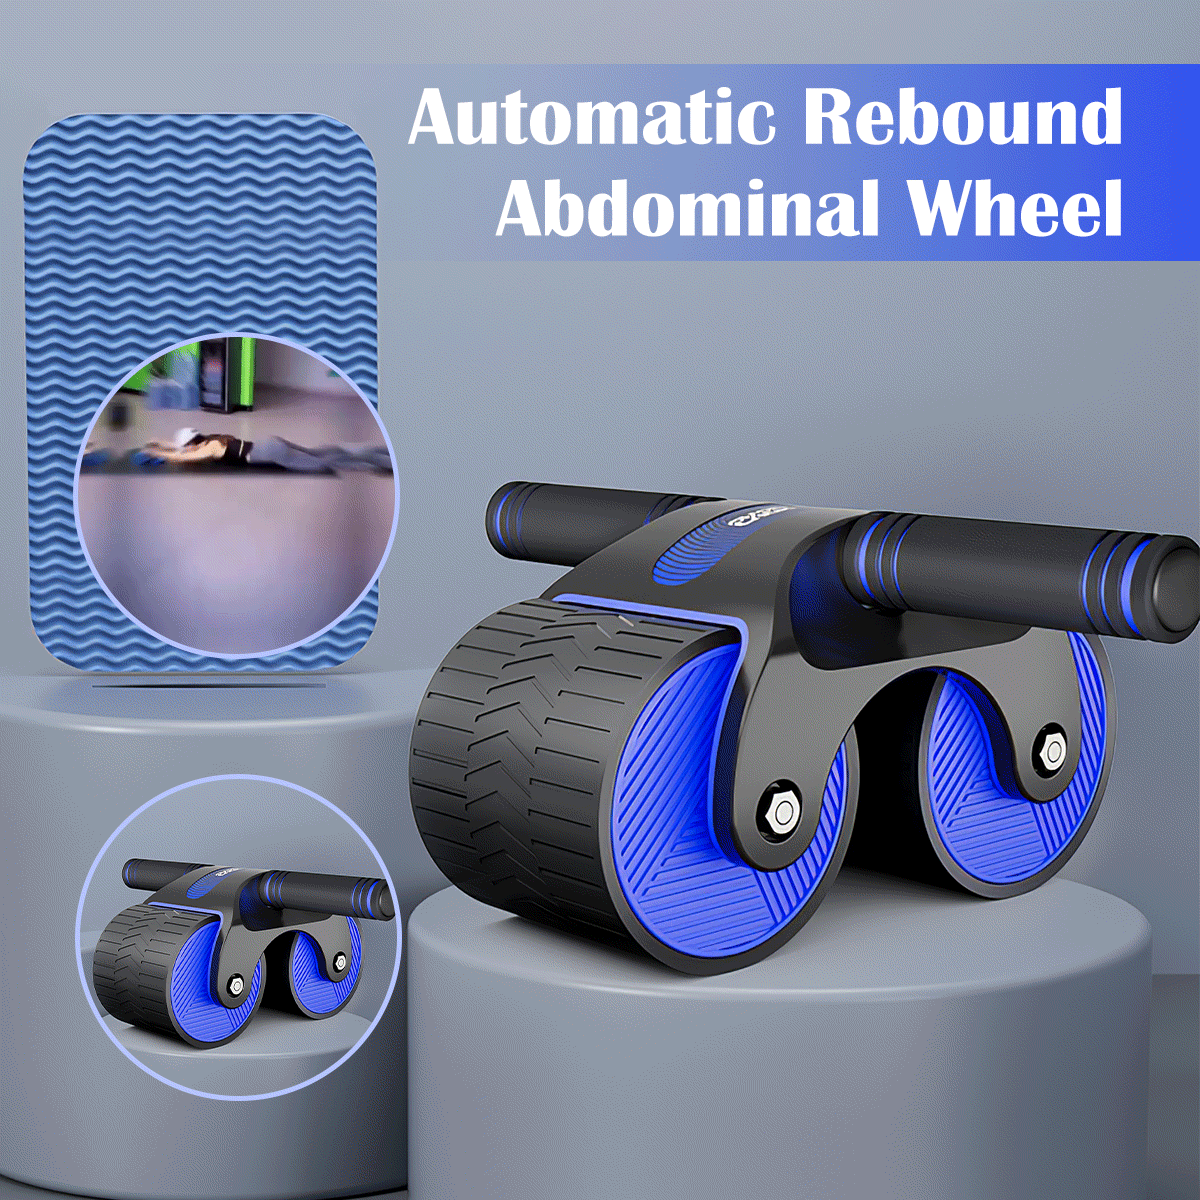 Trending Automatic Rebound Abdominal Wheel